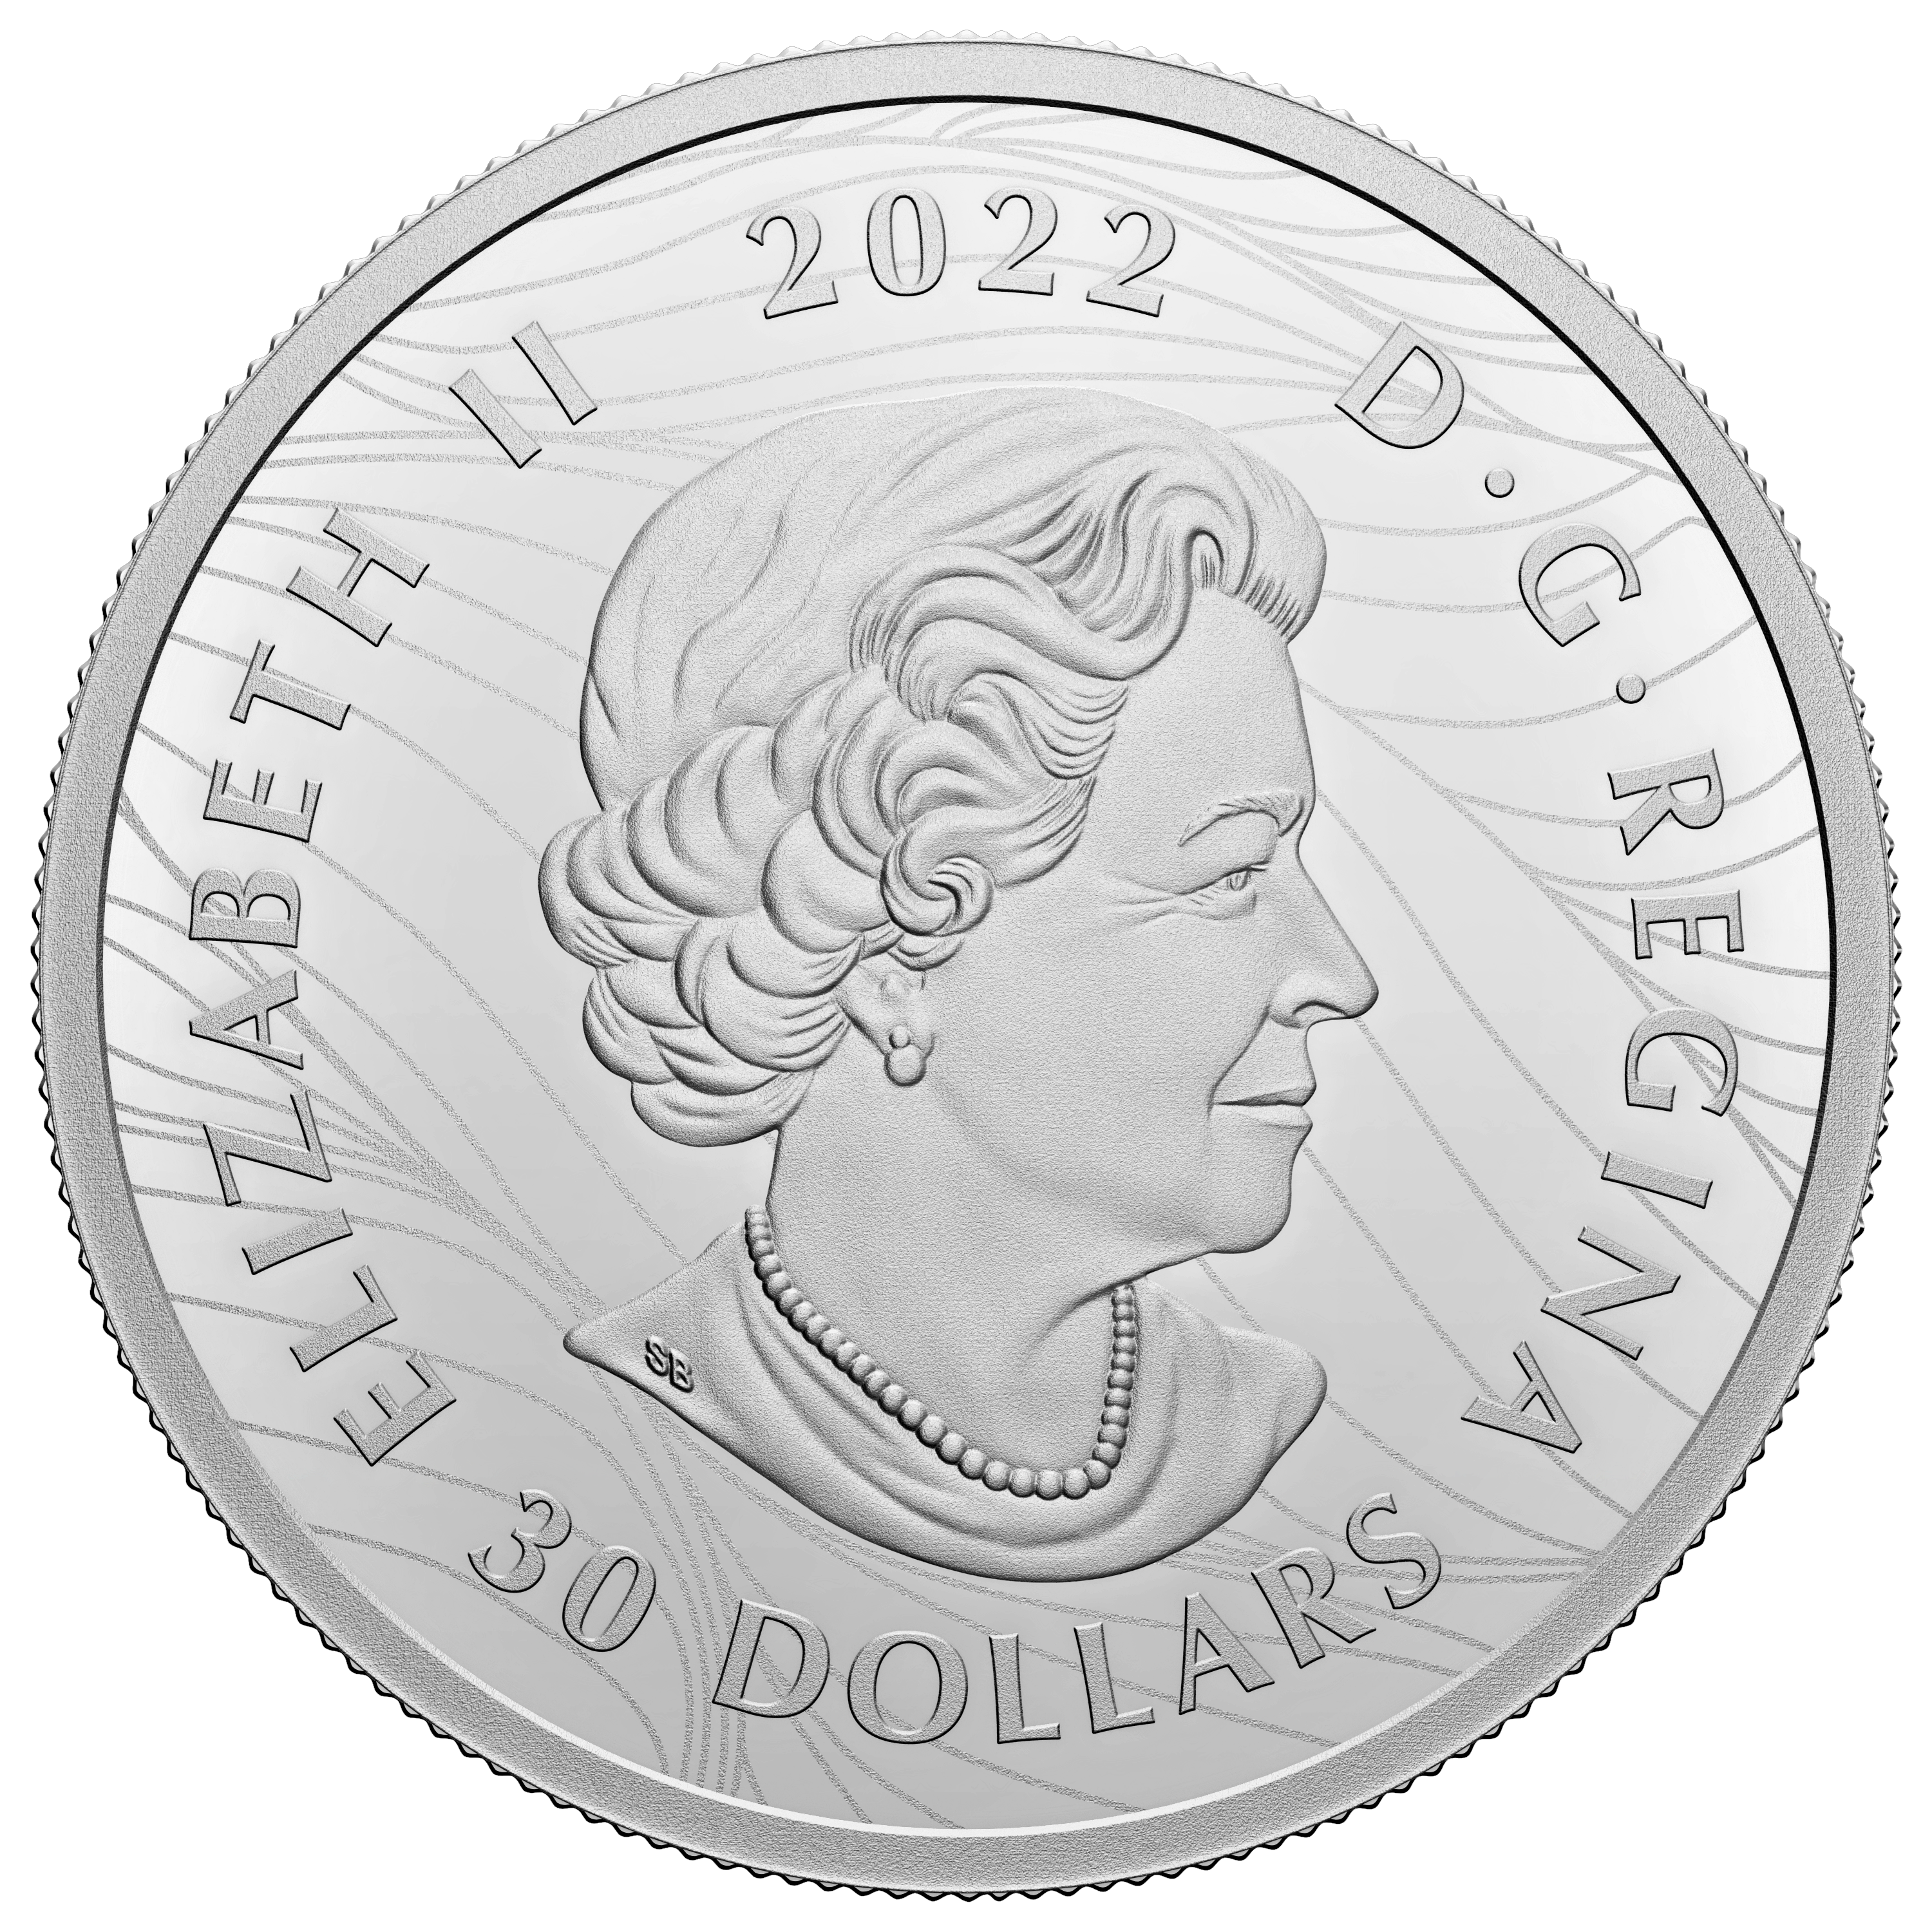 VISIONS OF CANADA 2 Oz Silver Coin $30 Canada 2022